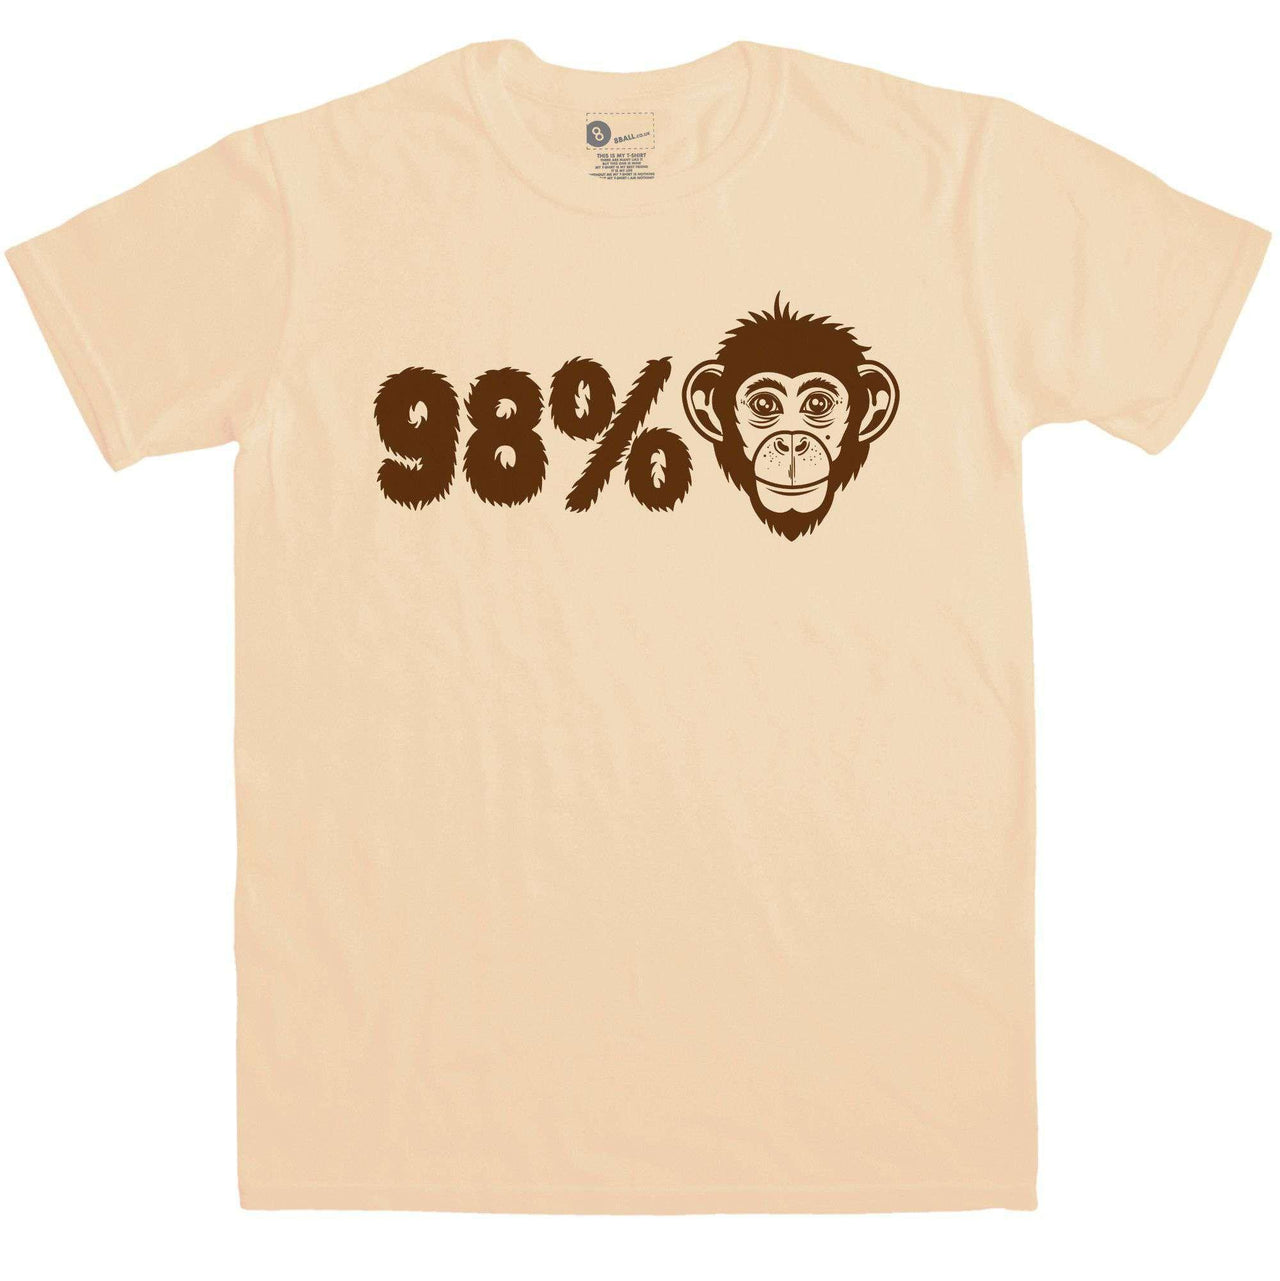 Nerd Geek Science Men's 98 % Chimp Graphic T-Shirt For Men 8Ball